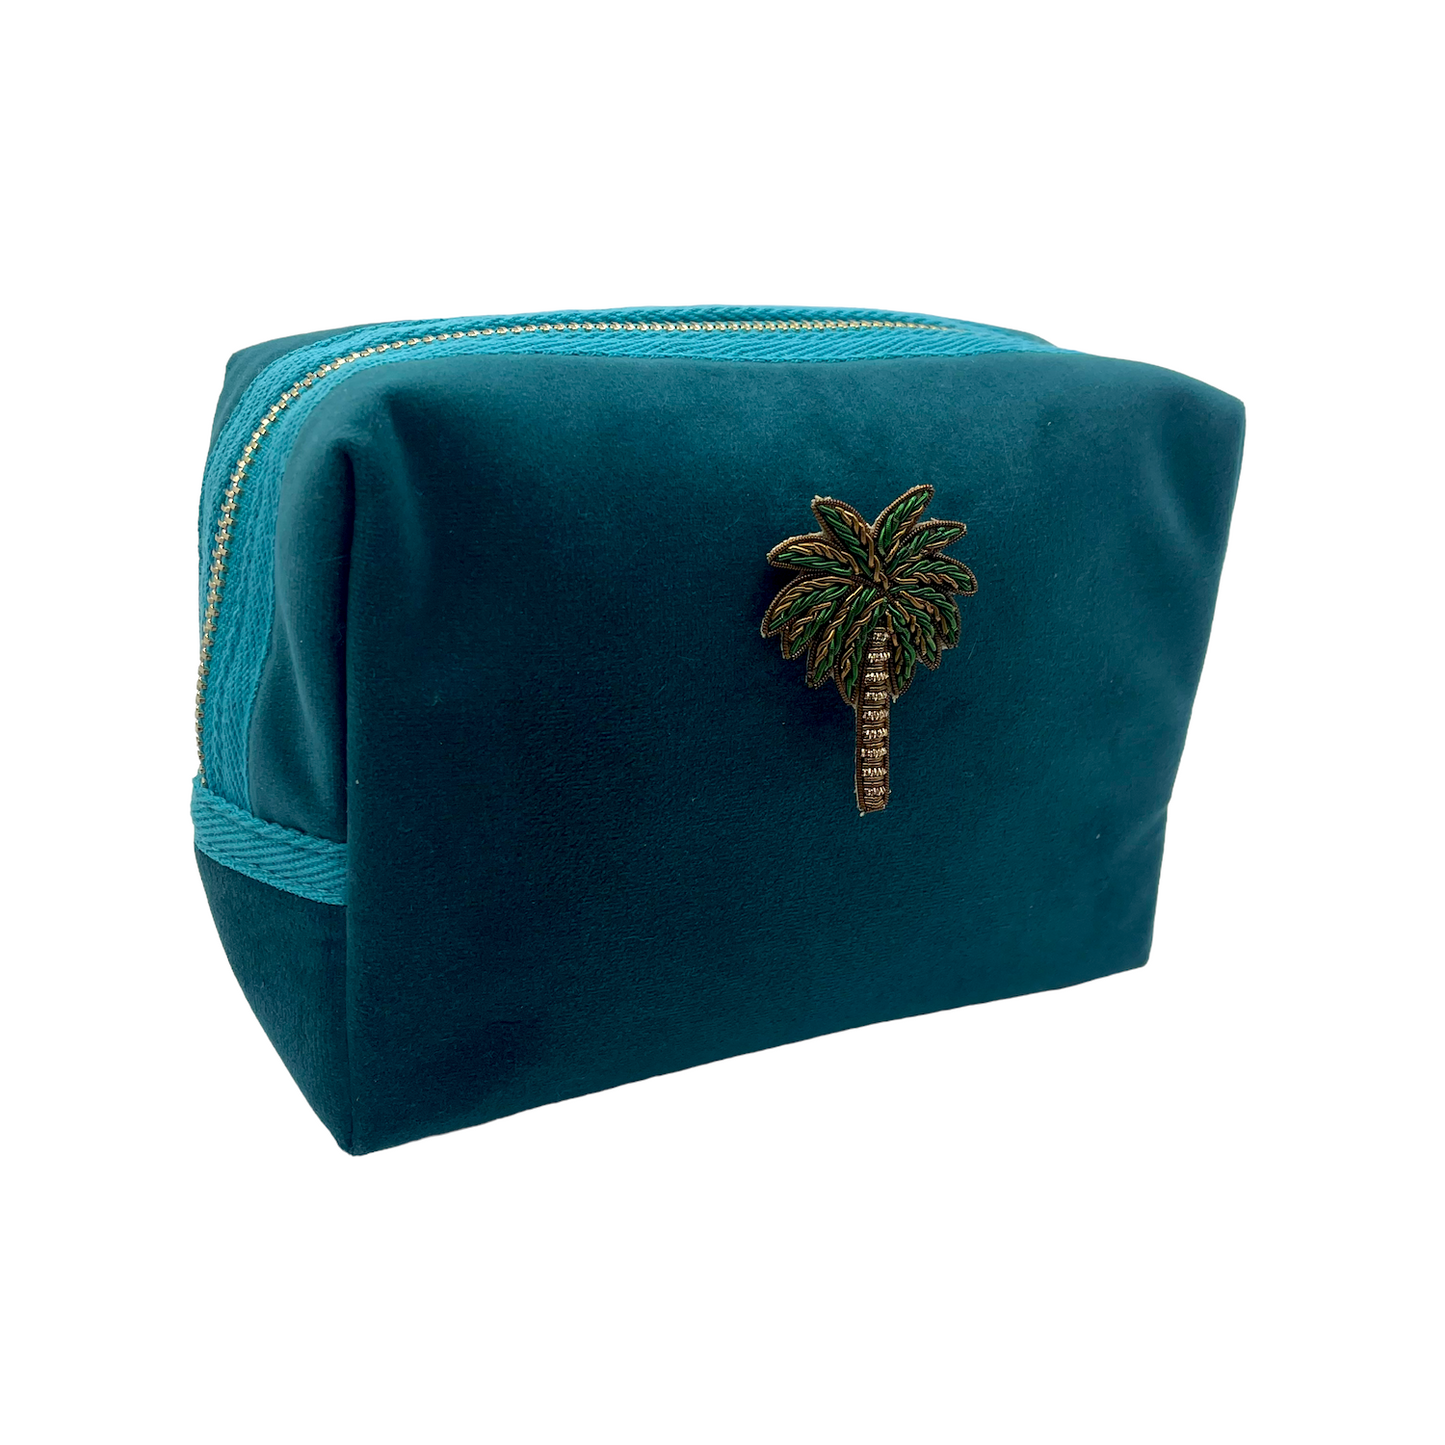 Teal make-up bag & green palm tree - recycled velvet